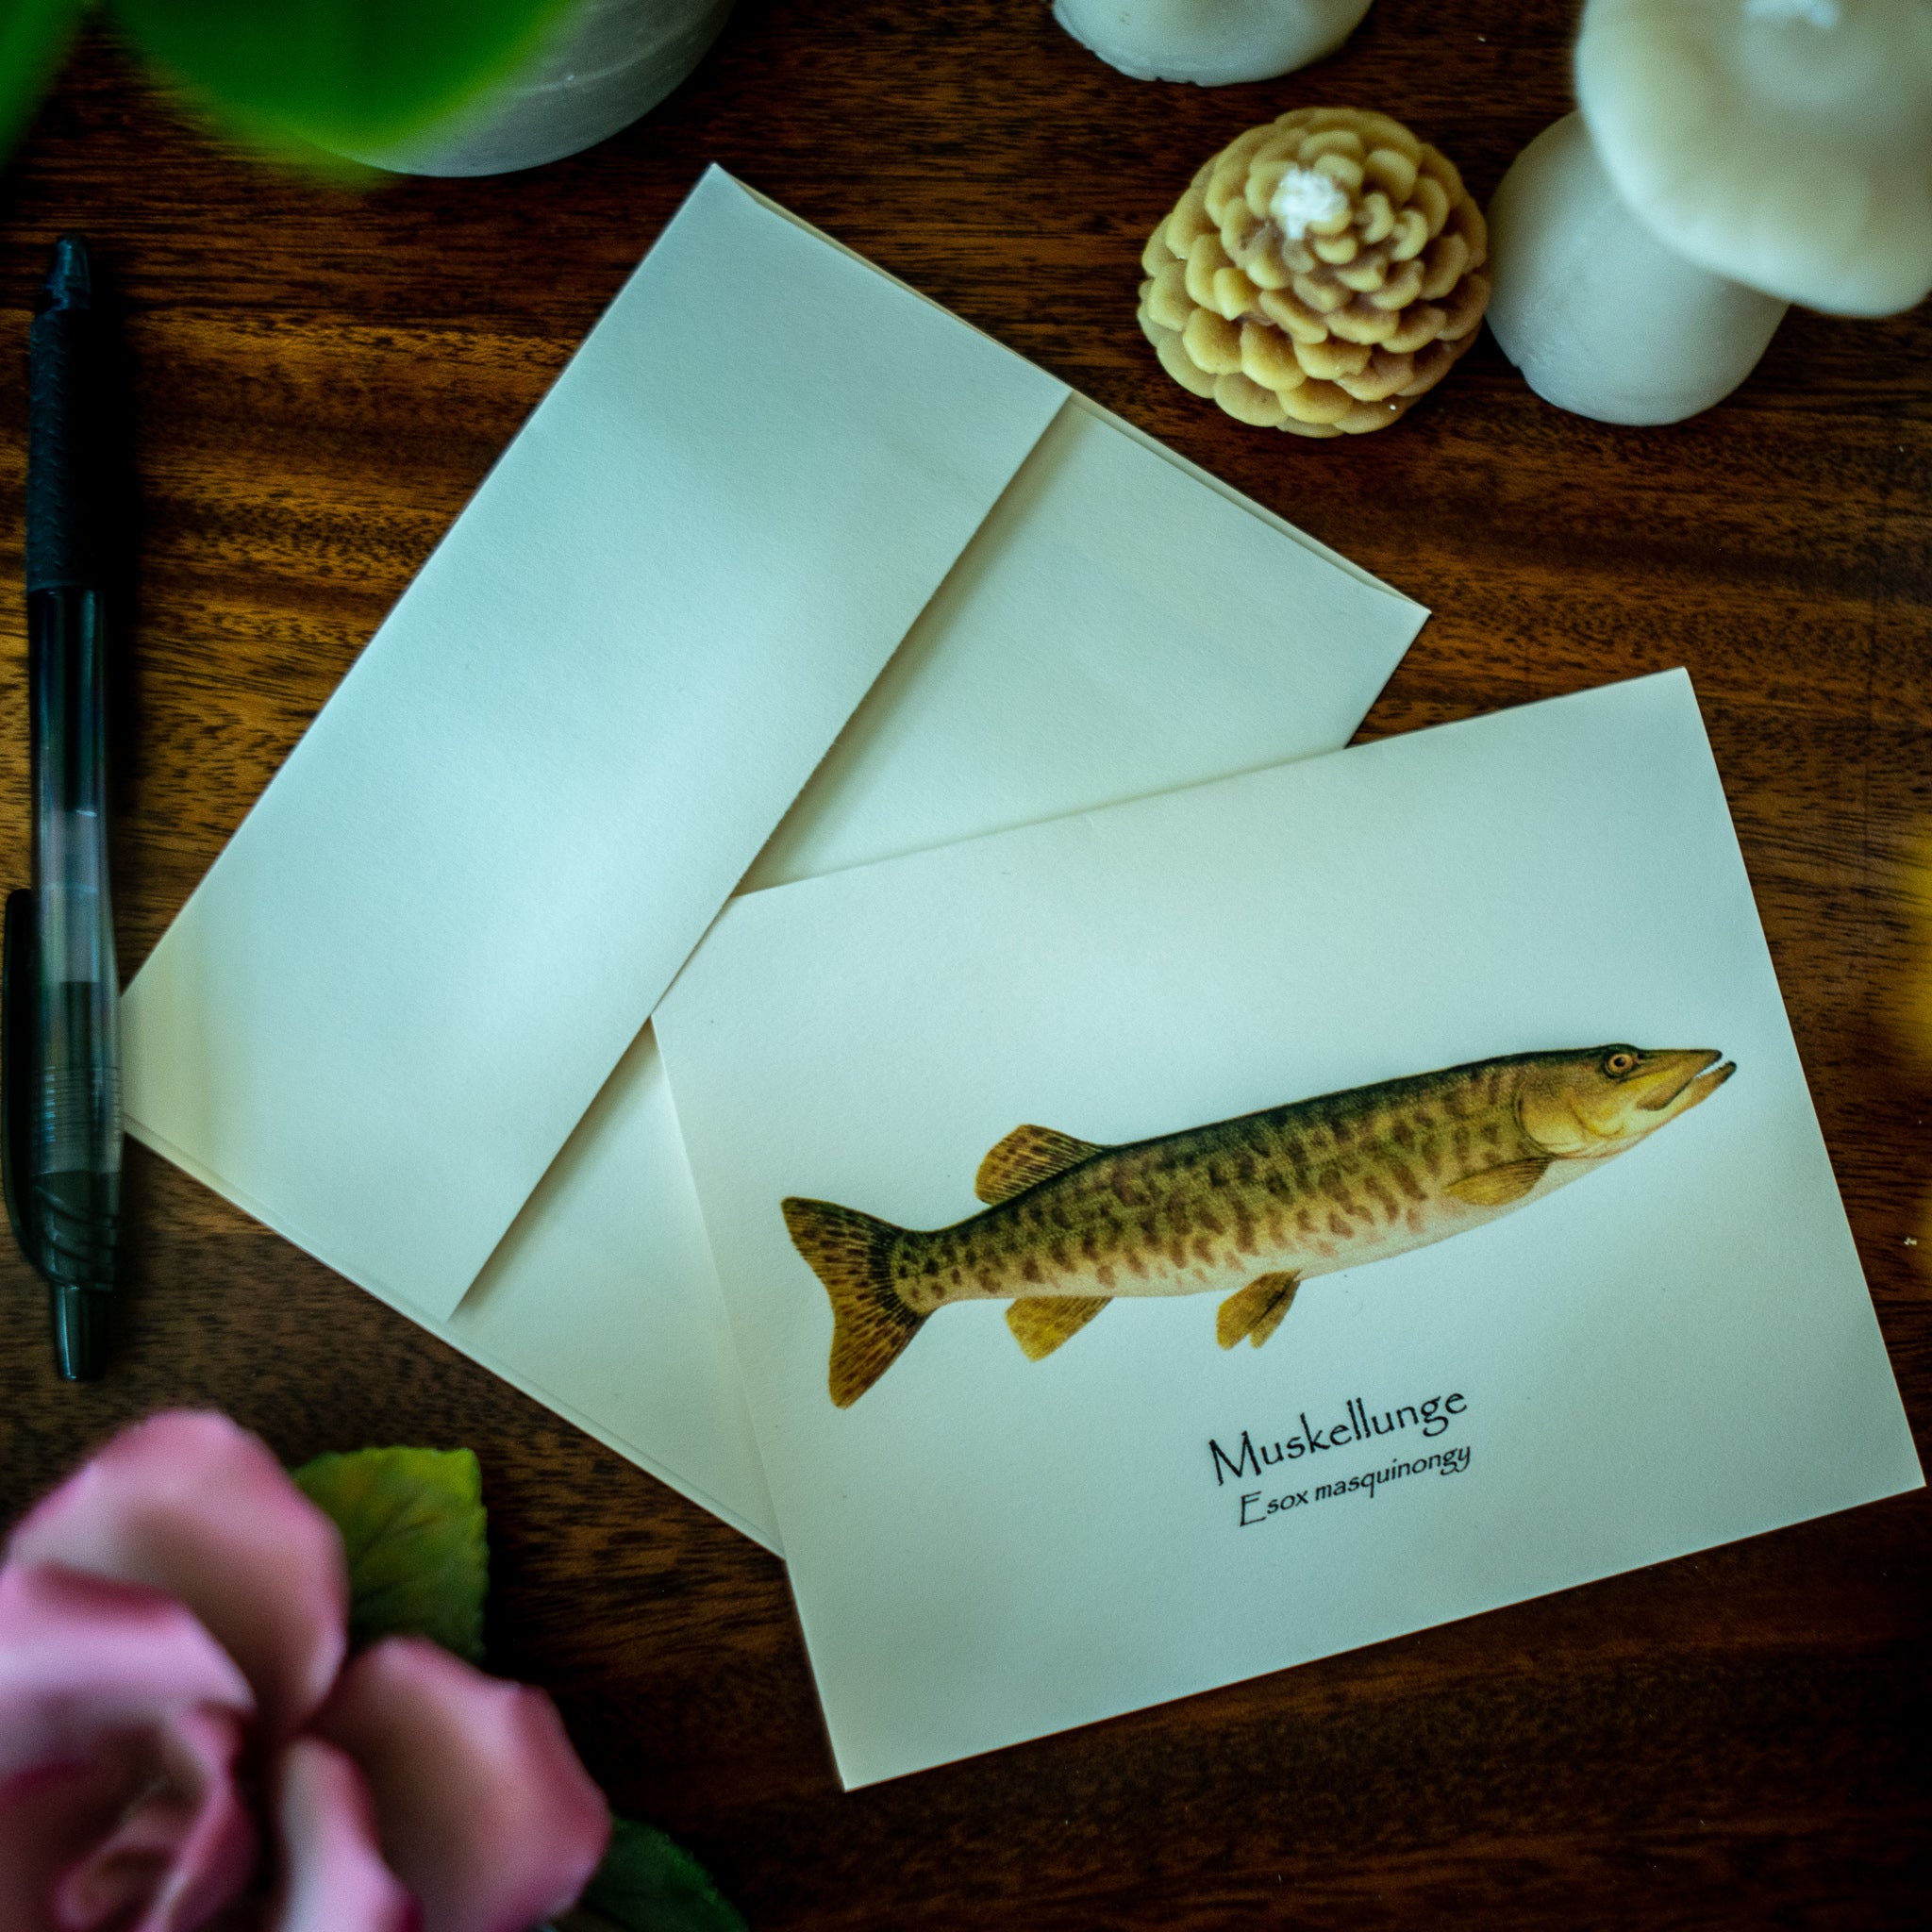 Fish Stock Recipe, A Magic Elixir — Meadowlark Journal